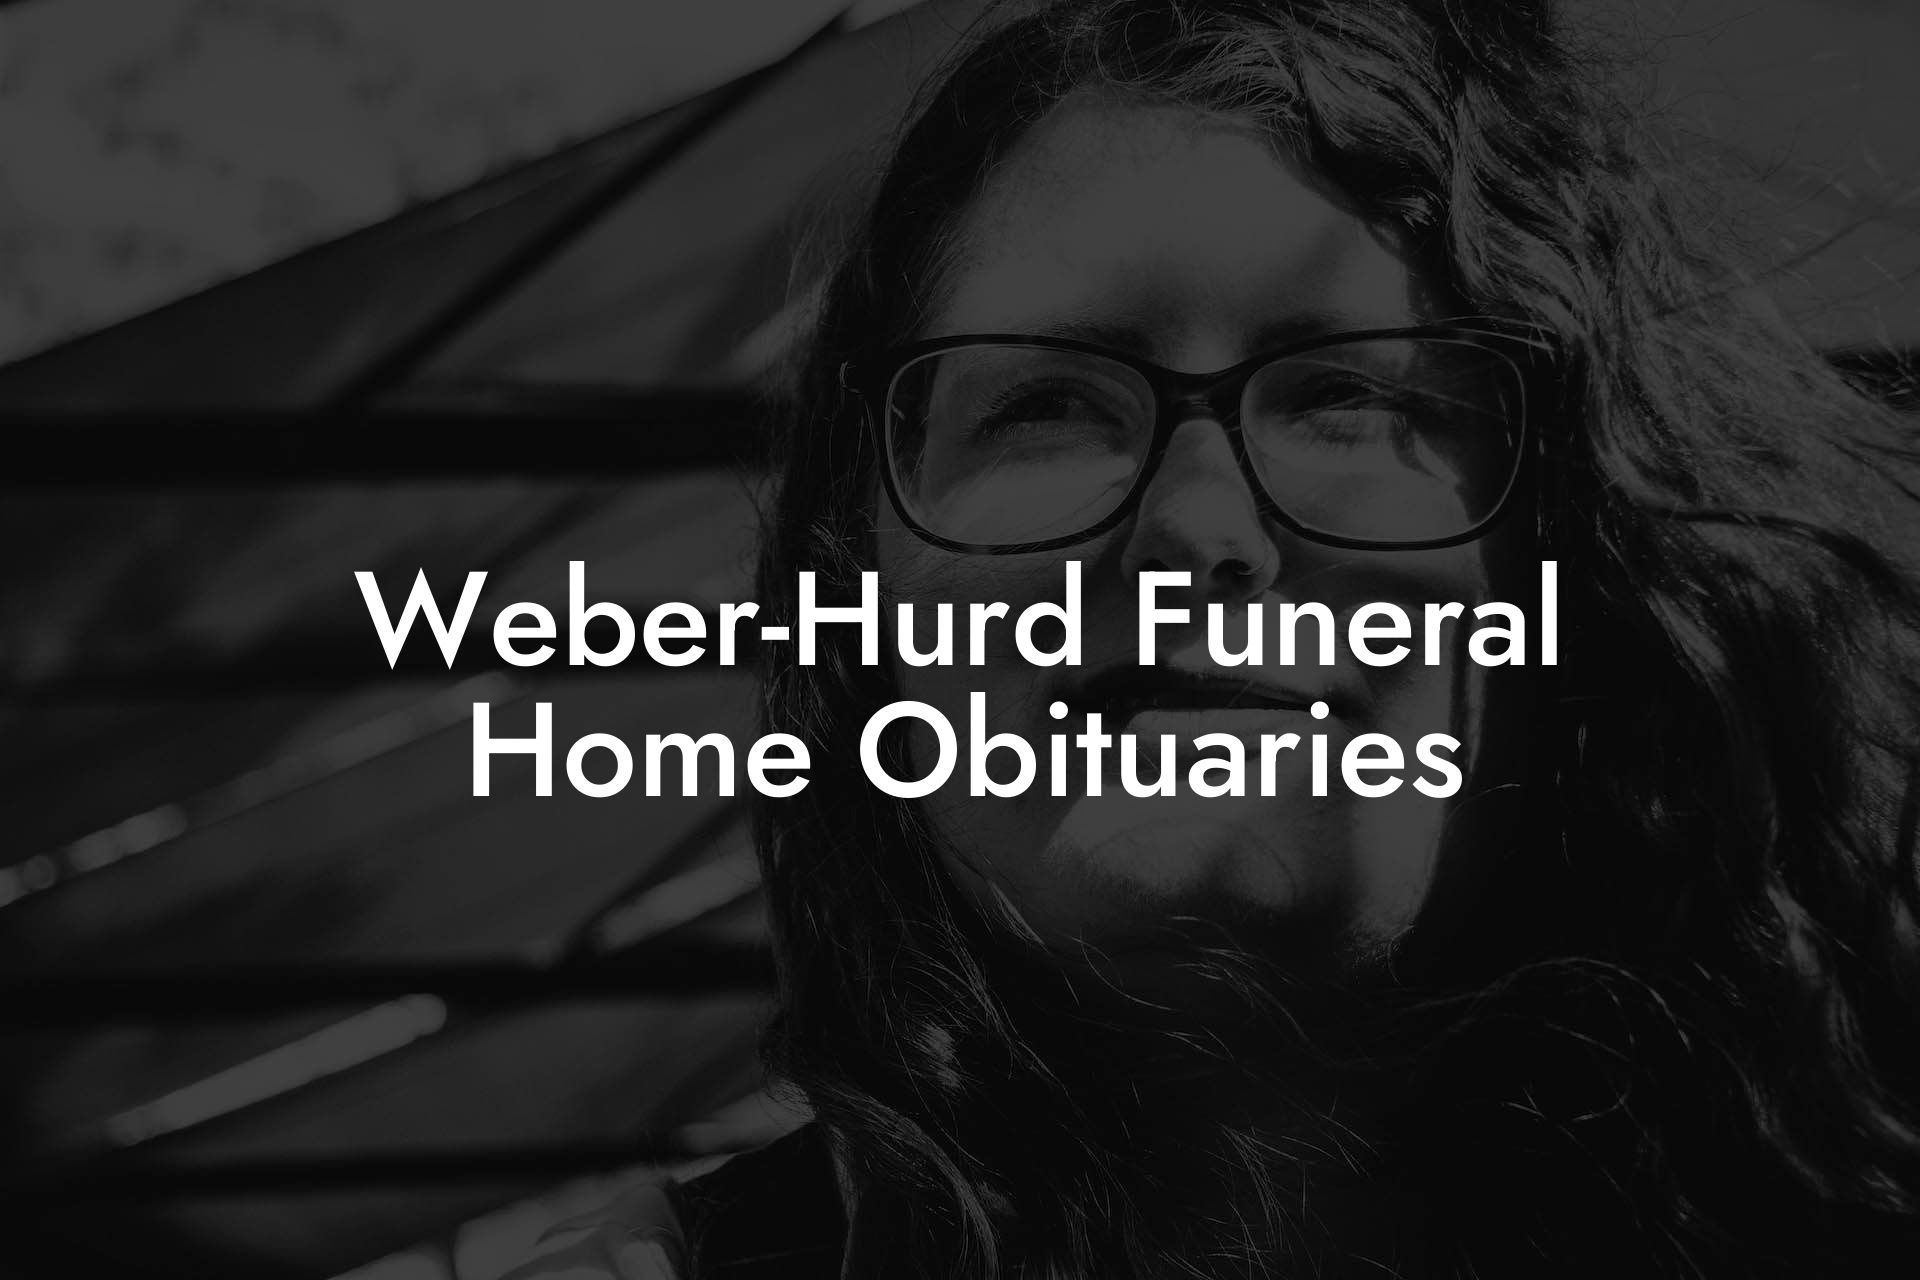 Weber-Hurd Funeral Home Obituaries